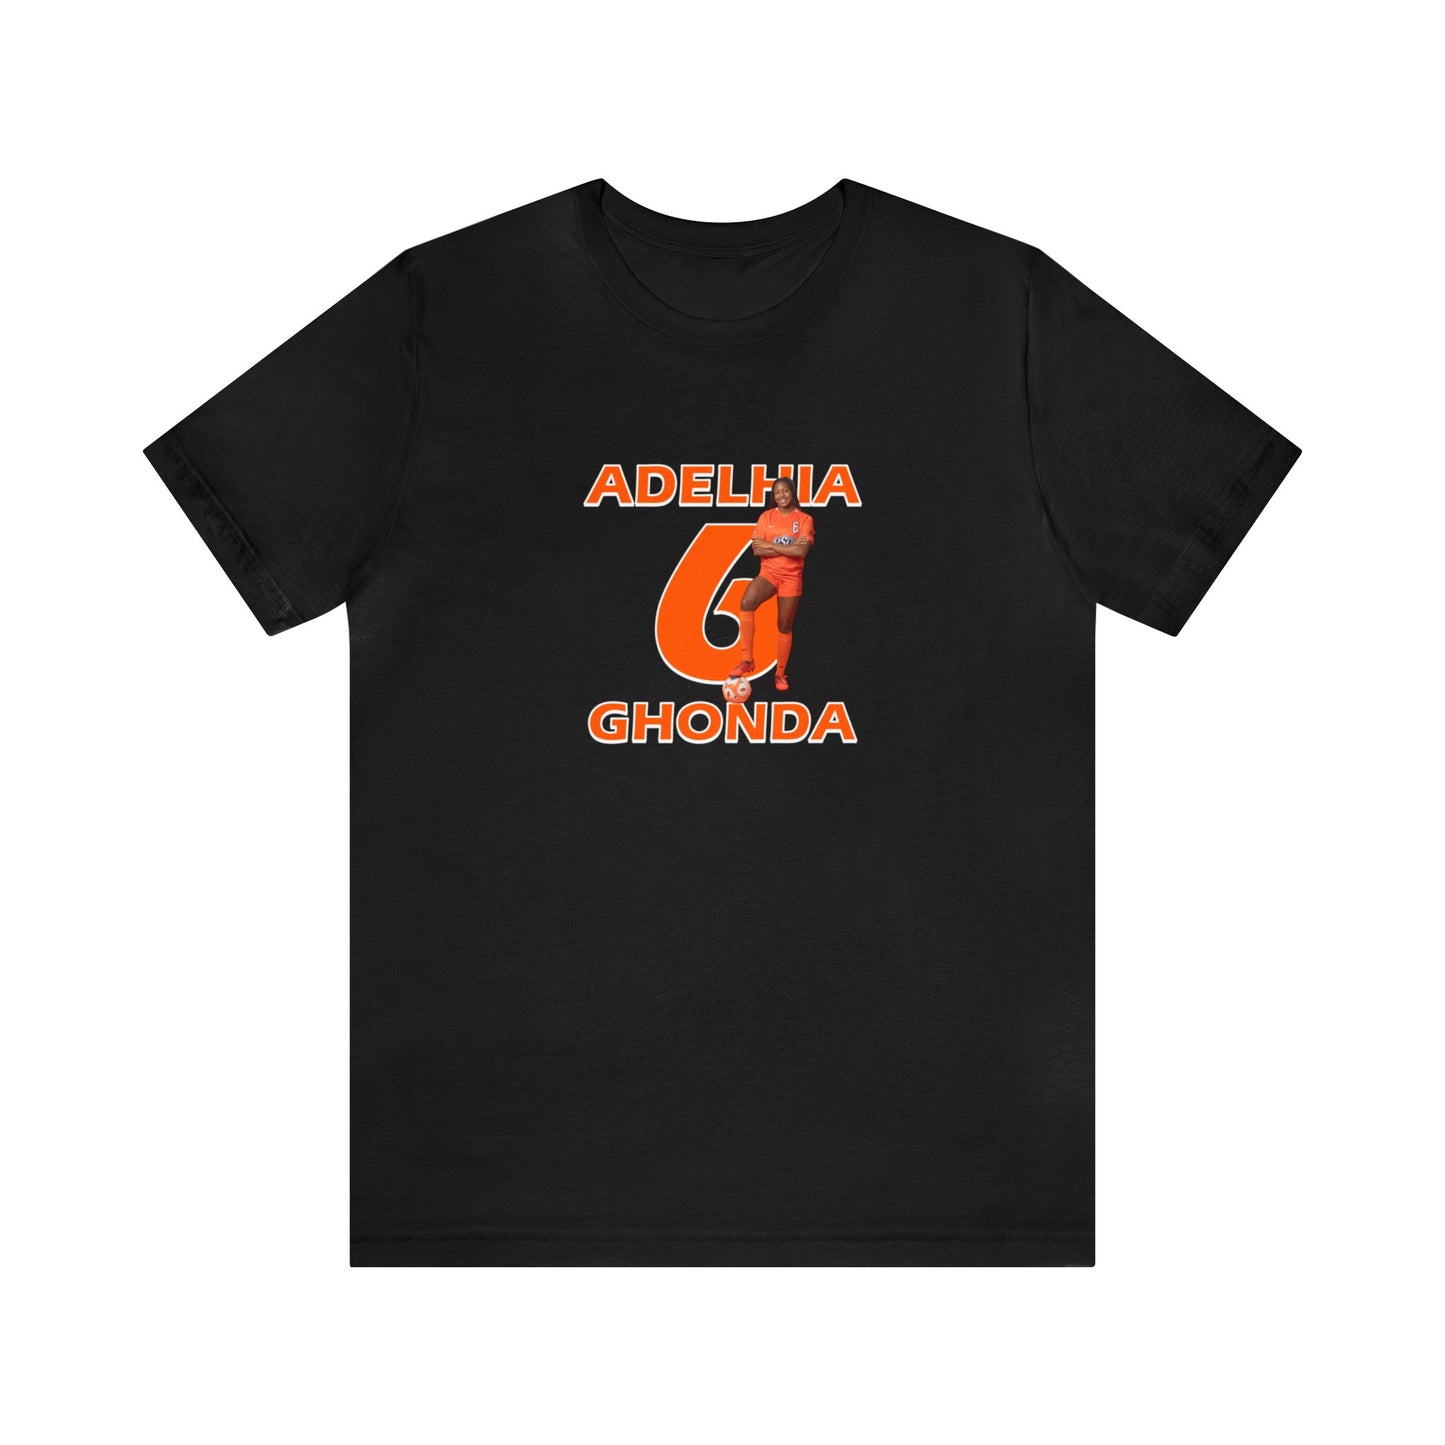 Adelhia Ghonda T-Shirt